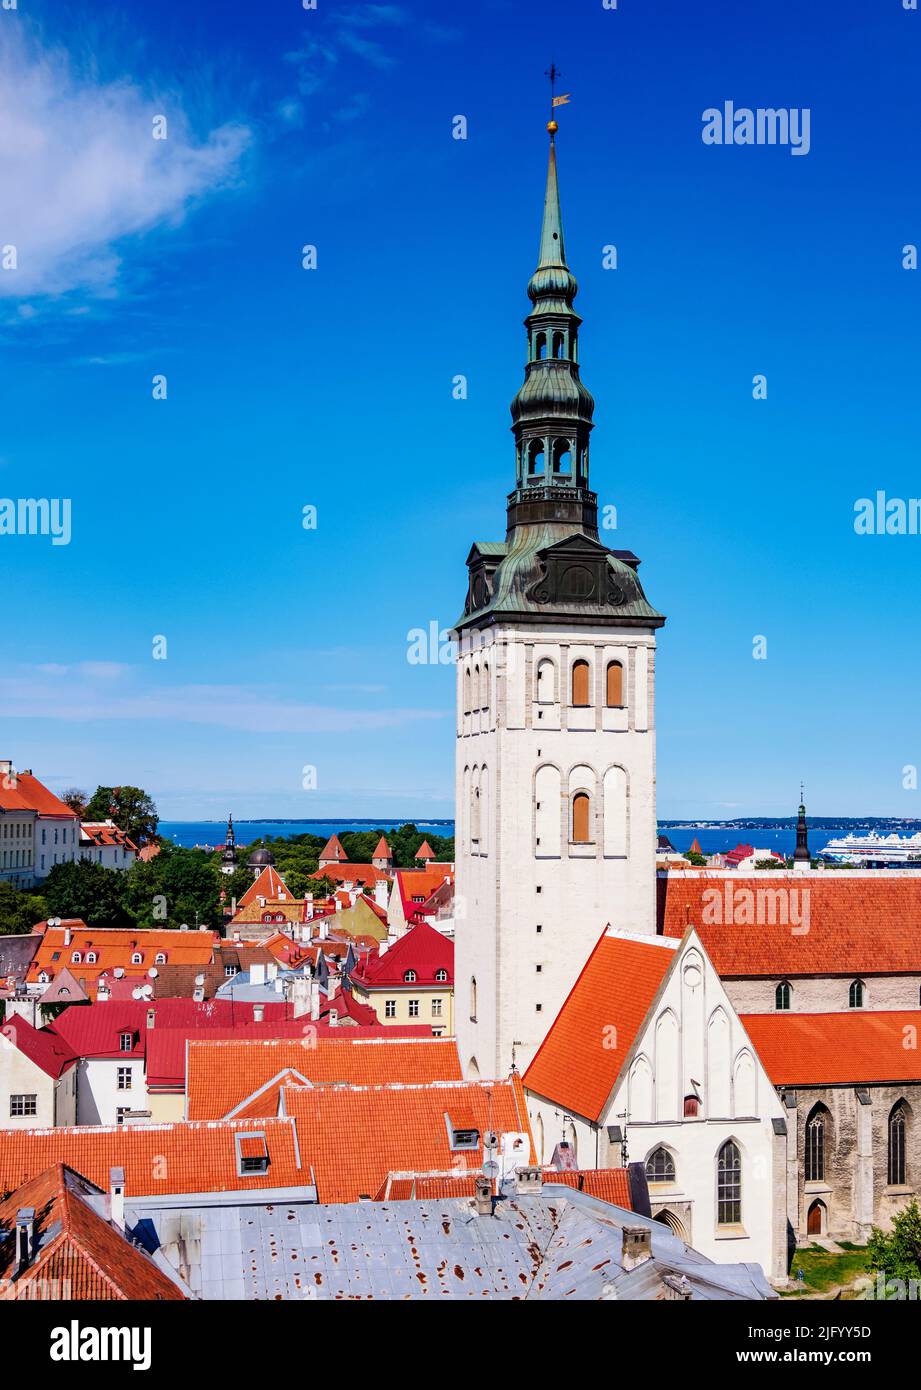 St. Nicholas Church, Old Town, UNESCO World Heritage Site, Tallinn, Estonia, Europe Stock Photo